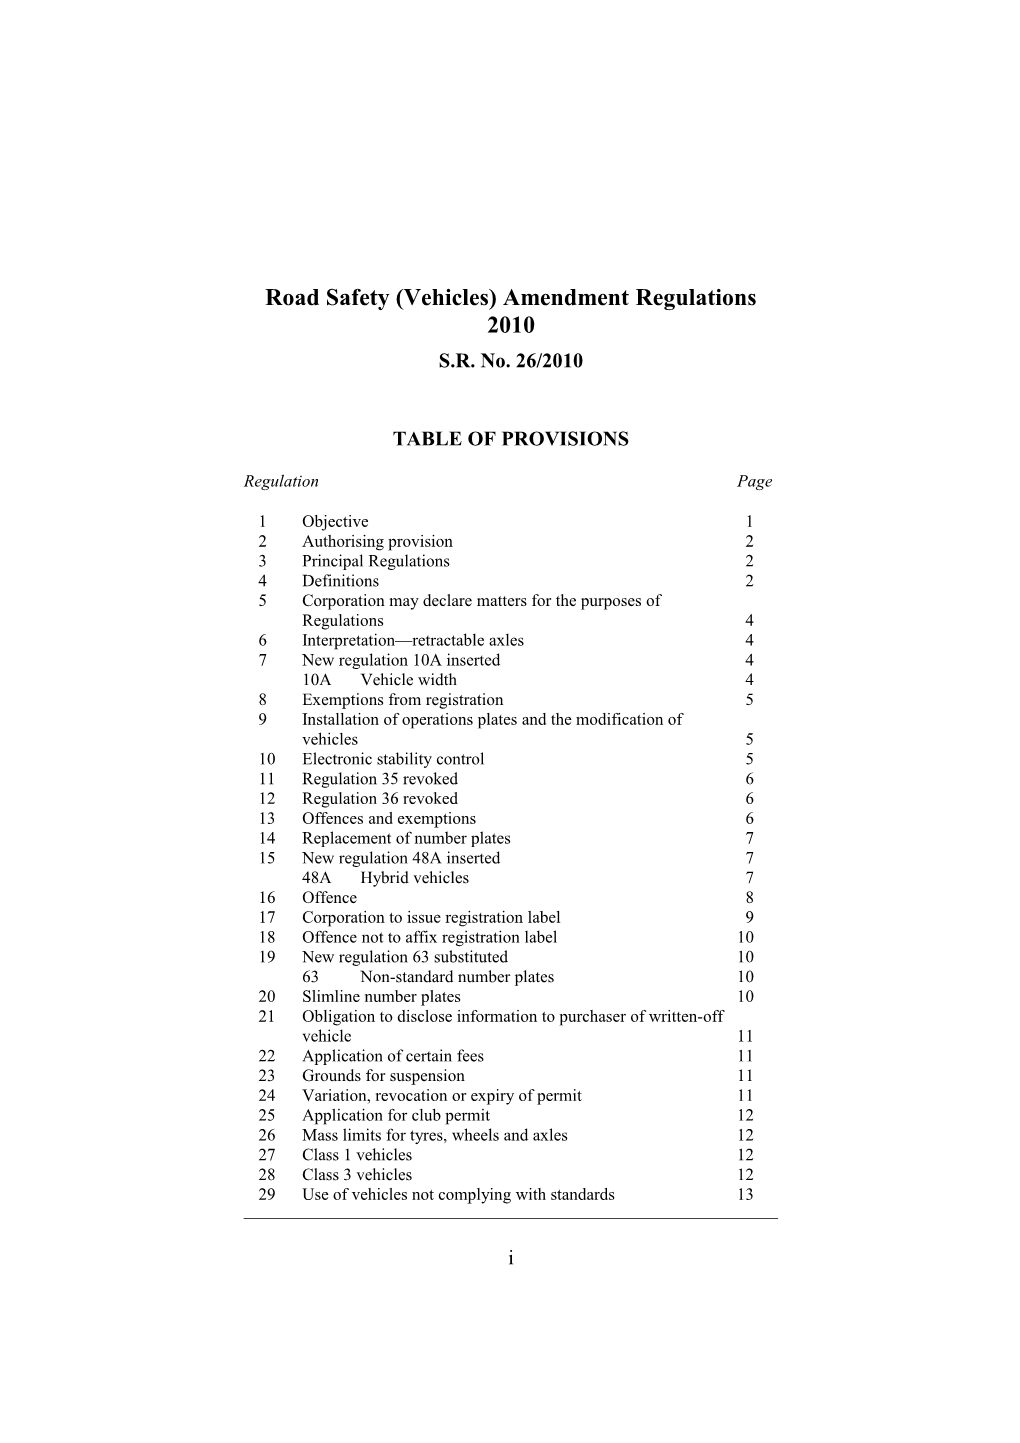 Road Safety (Vehicles) Amendment Regulations 2010